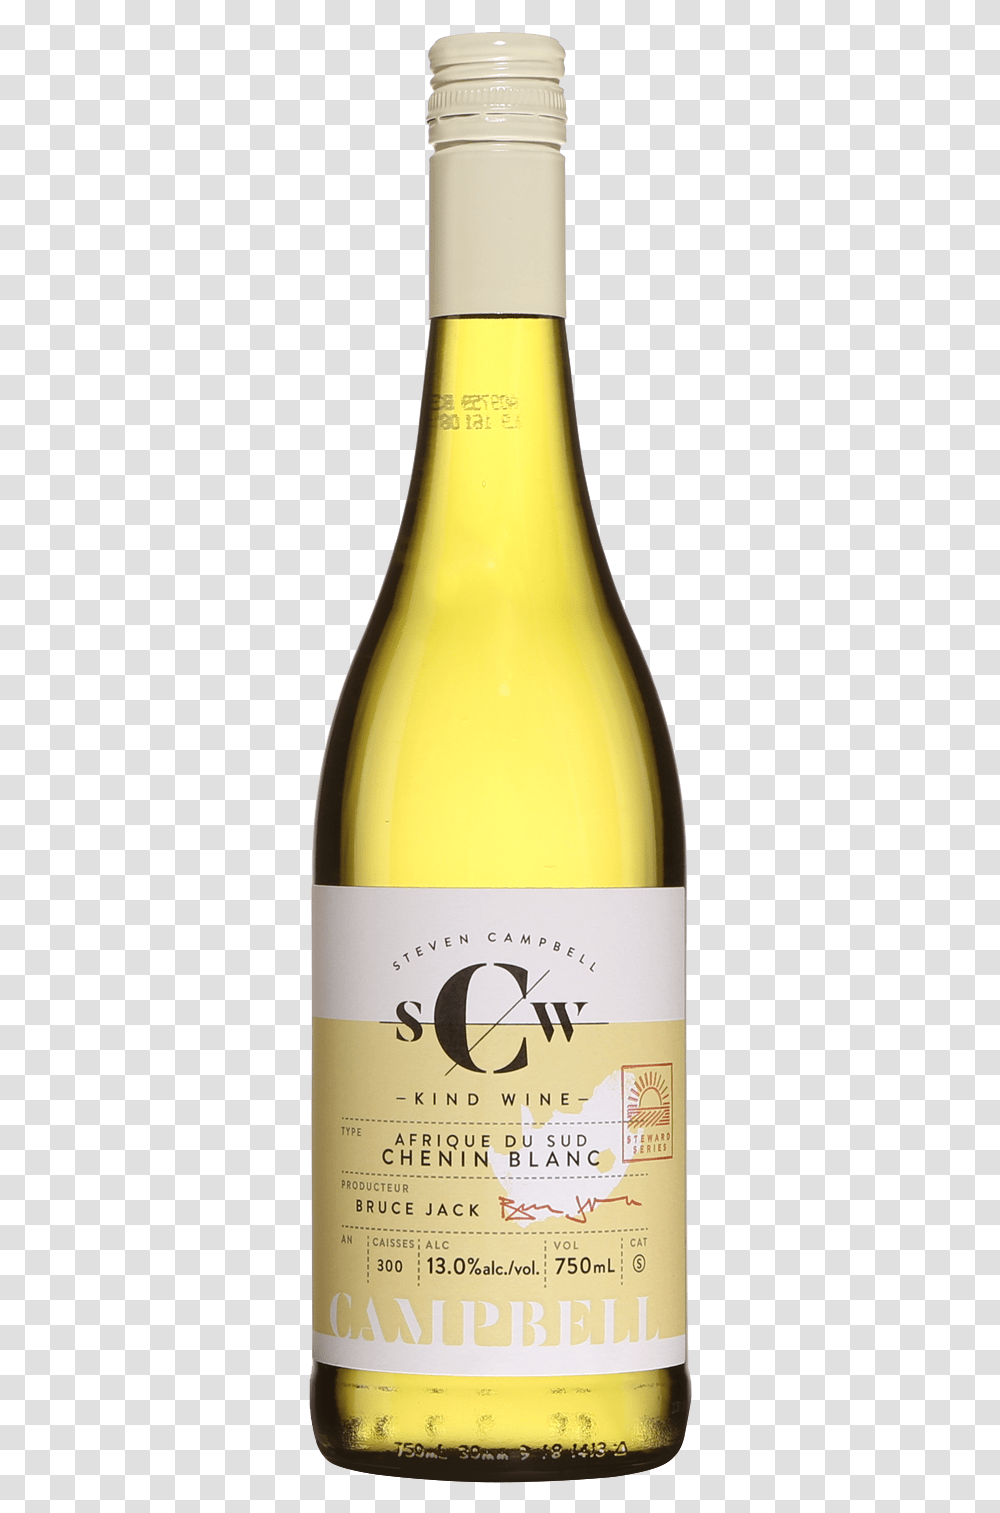 Campbell Kind Wines Chenin Blanc Western Cape Glass Bottle, Alcohol, Beverage, Drink, Wine Bottle Transparent Png